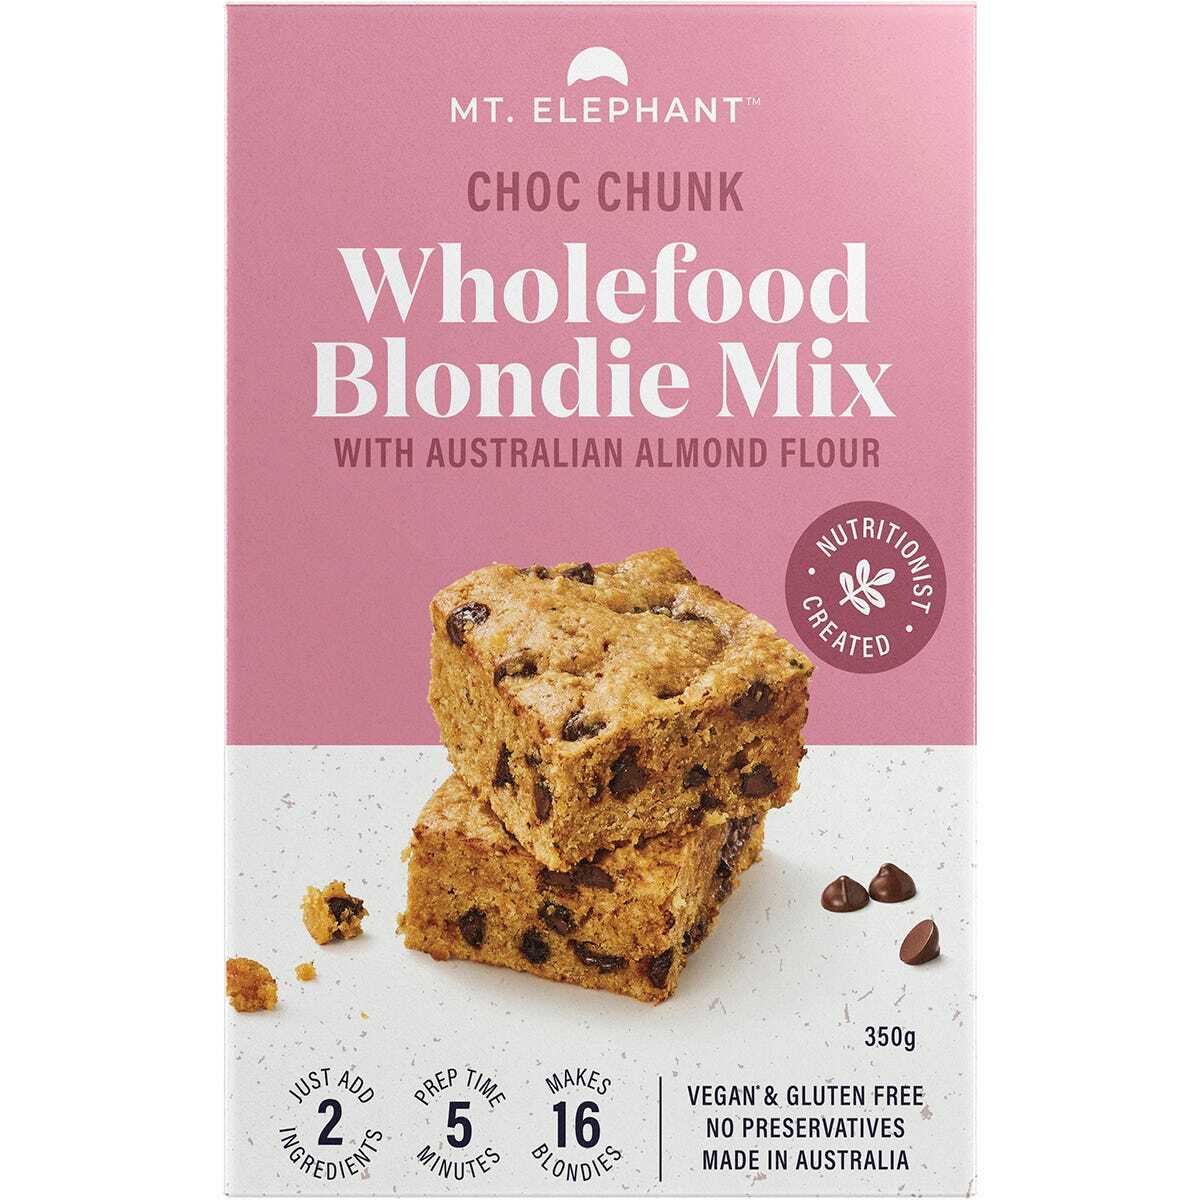 Choc Chunk Wholefood Blondie Mix (5x350g)